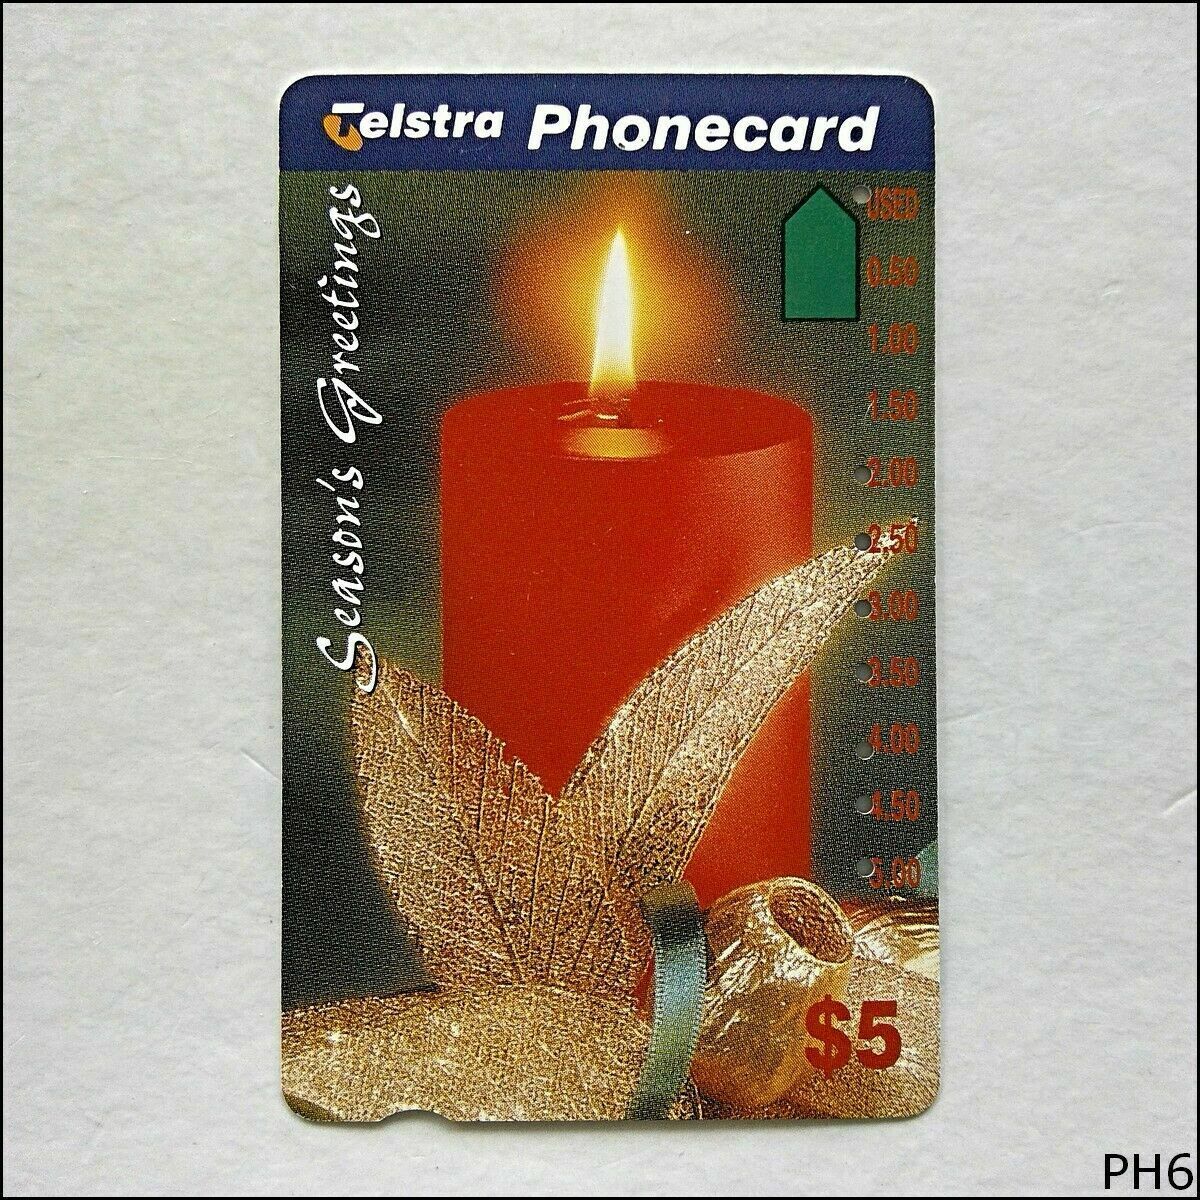 Telstra Christmas 1995 Candle N954412 957 $5 Phonecard (PH6)